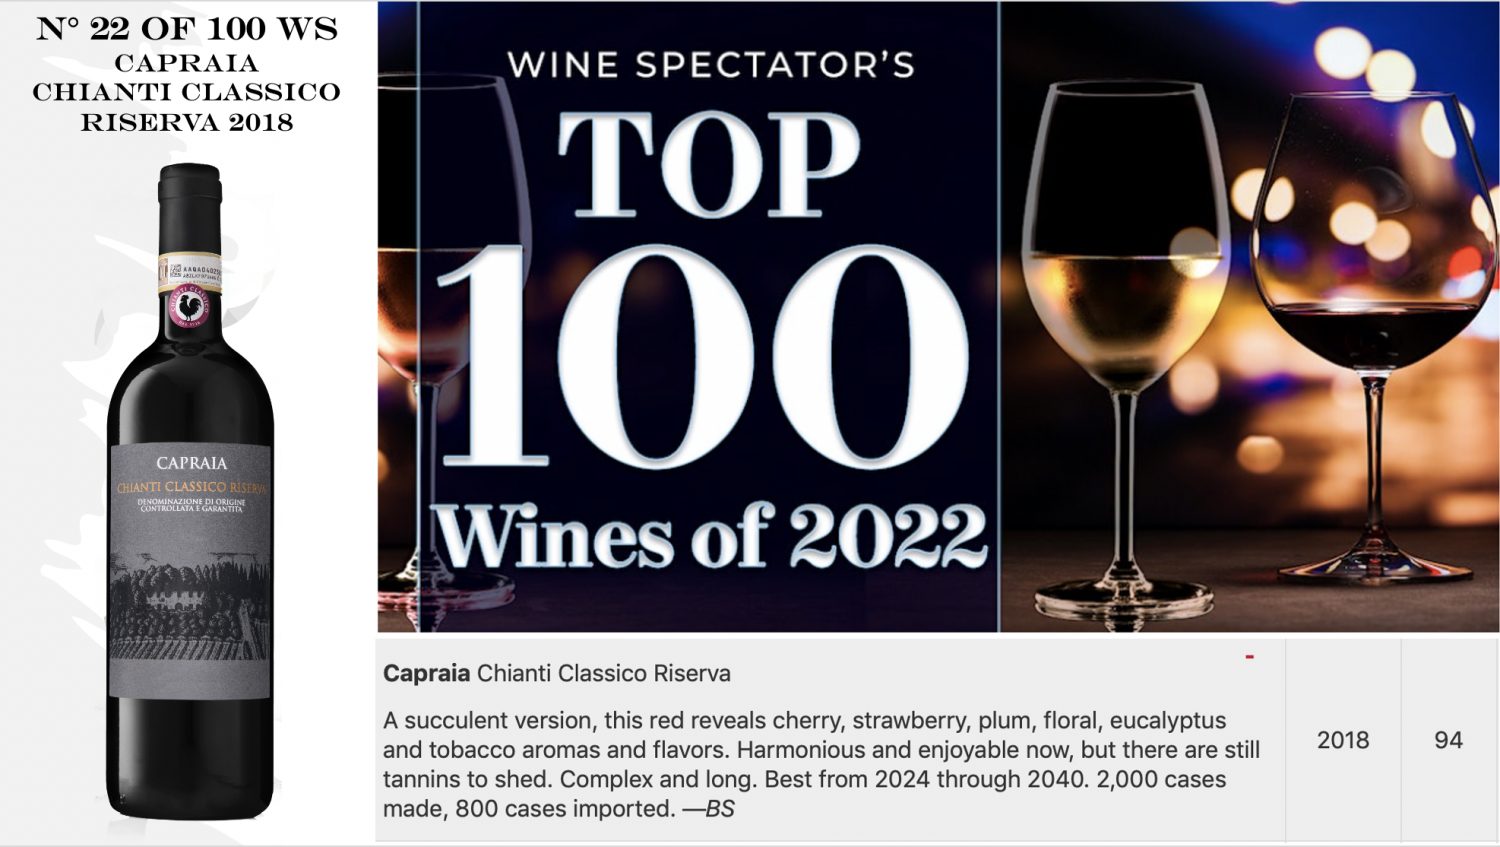 WINE SPECTATOR'S TOP 100 - CAPRAIA 2018 AT #22! Calì